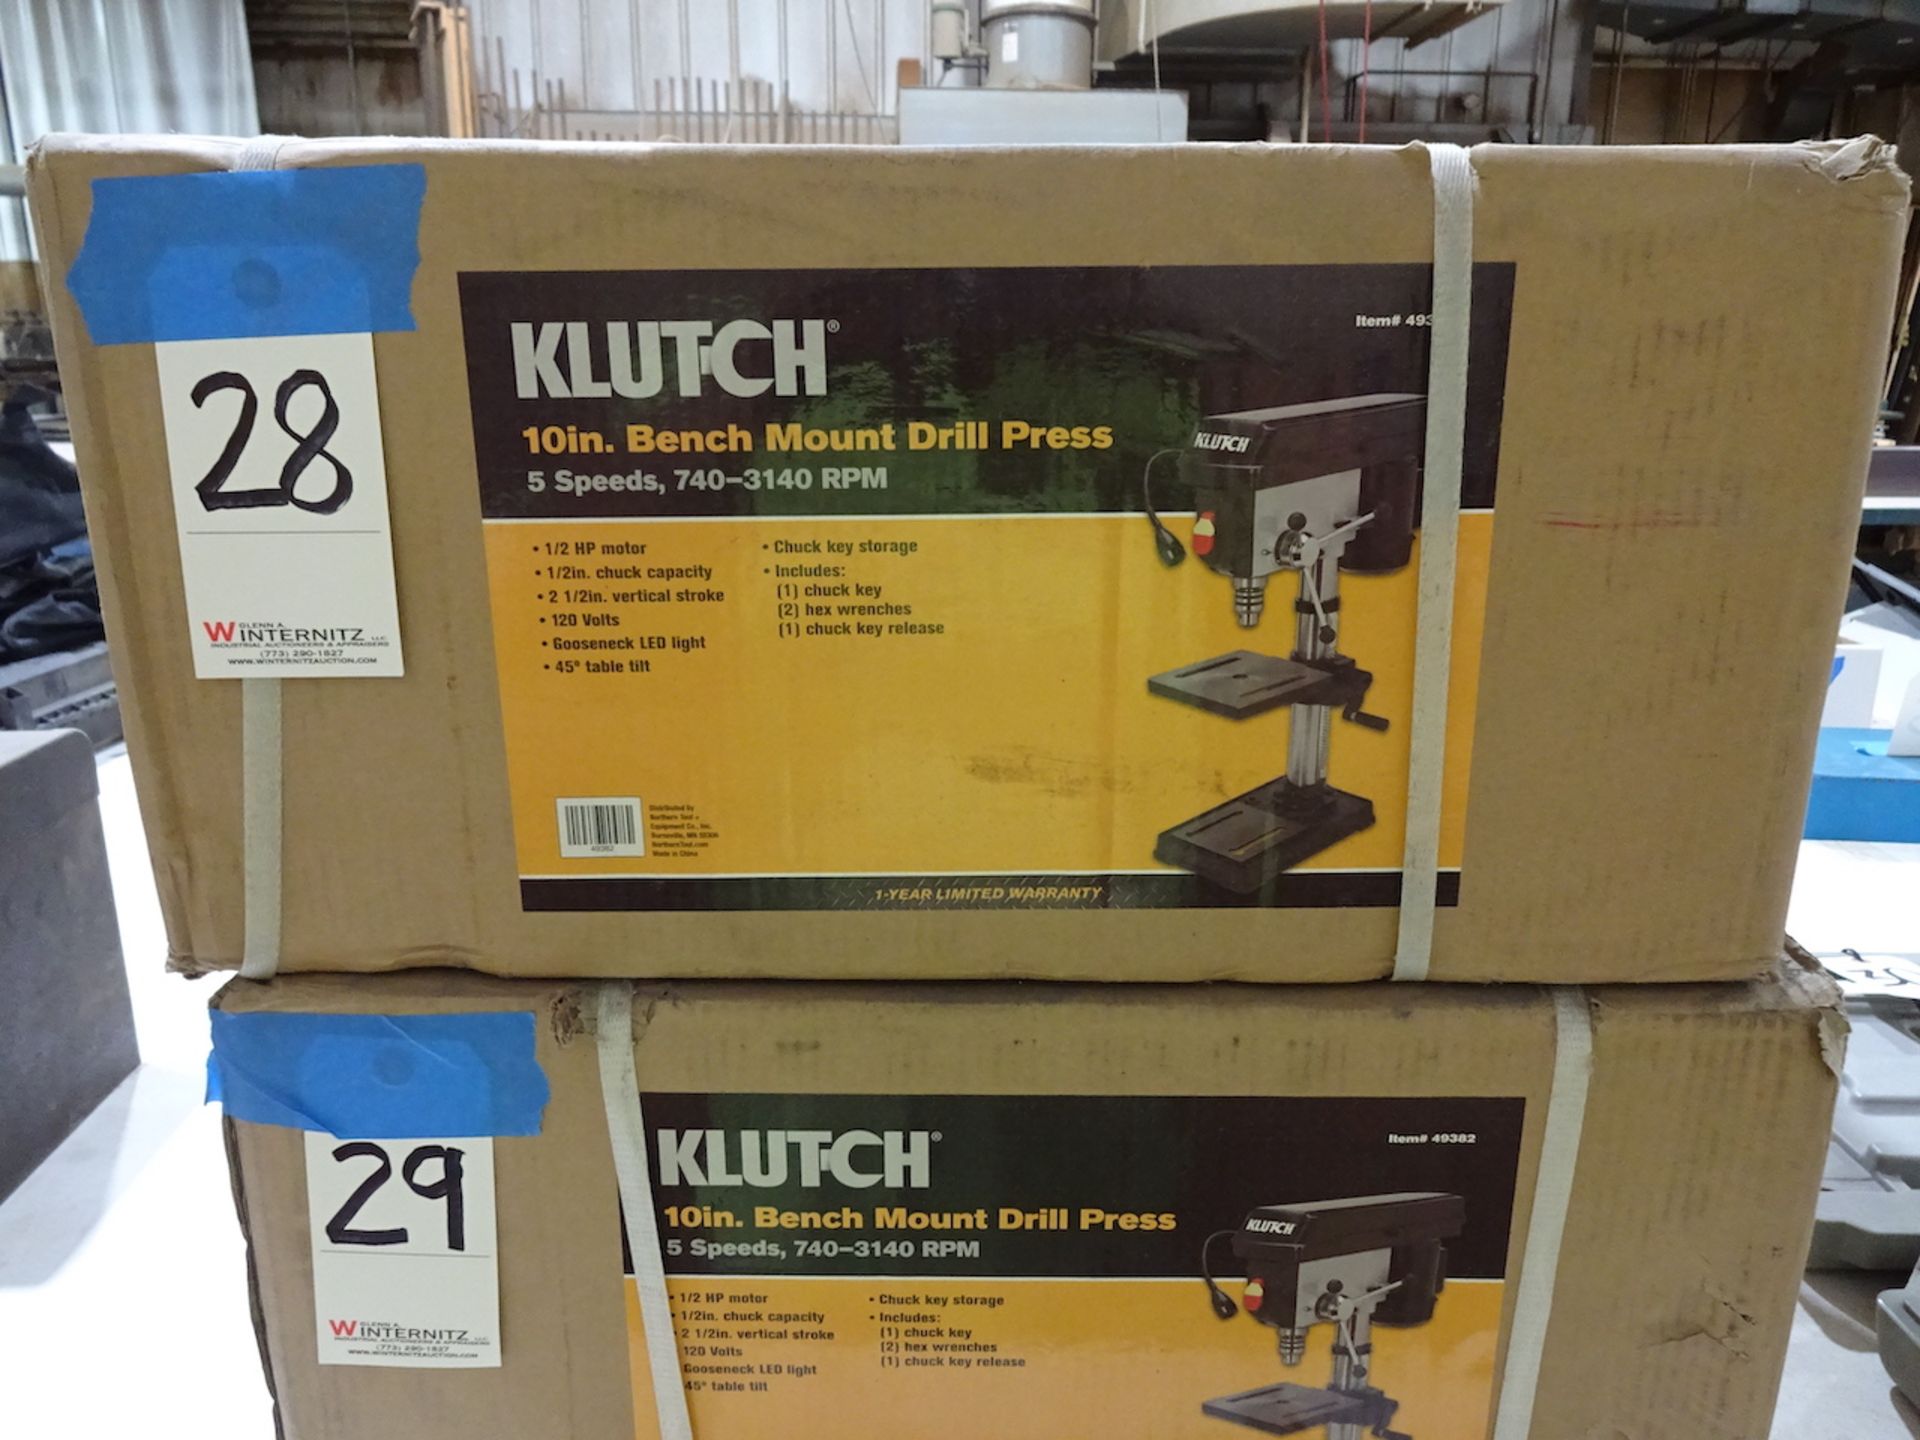 Klutch 10 in. Bench Mount Drill Press, (5) Speeds, 740 - 3140 RPM, 1/2 HP Motor, 1/2 in. Chuck